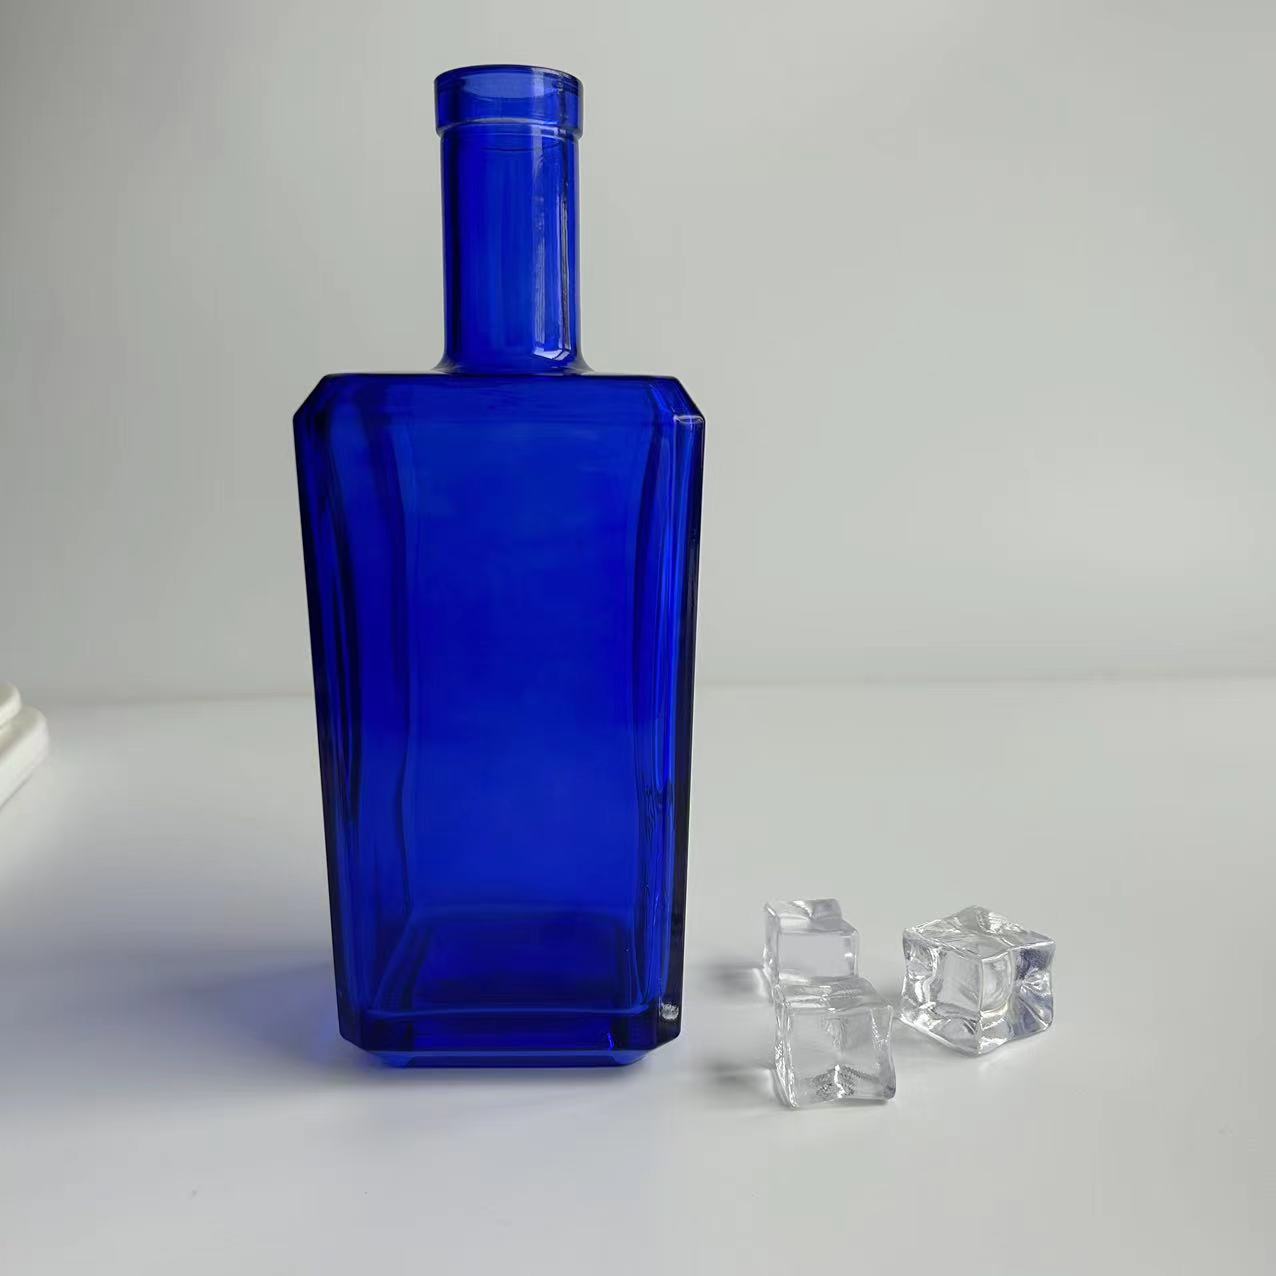 Introducing Our 750ml Cobalt Blue Bottle.